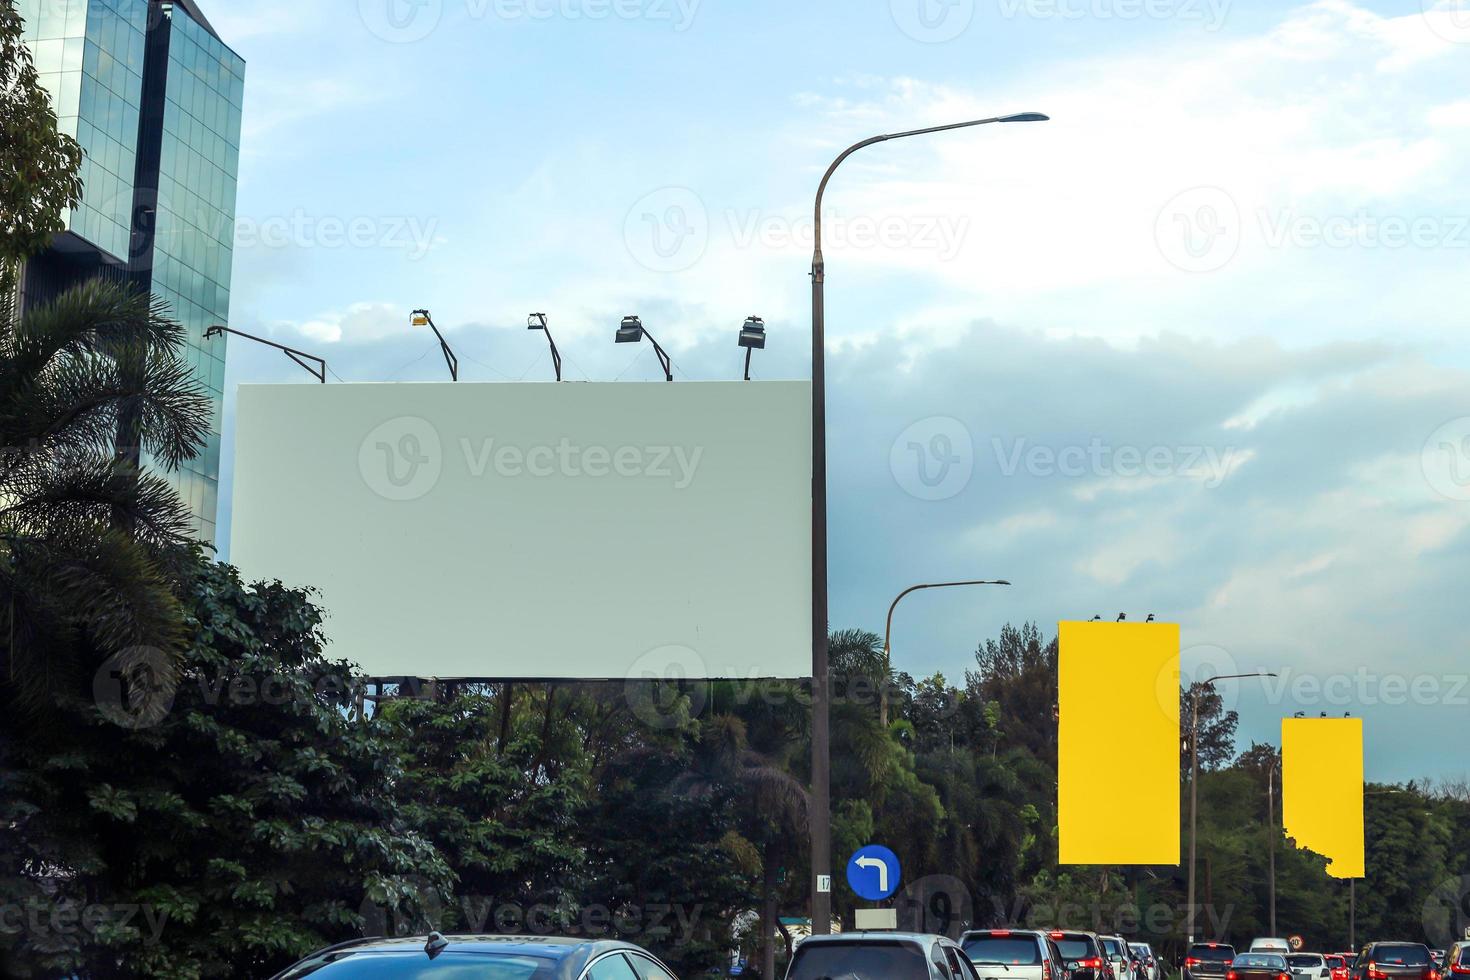 affischtavla mockup i stadsbakgrund med vacker himmel. foto